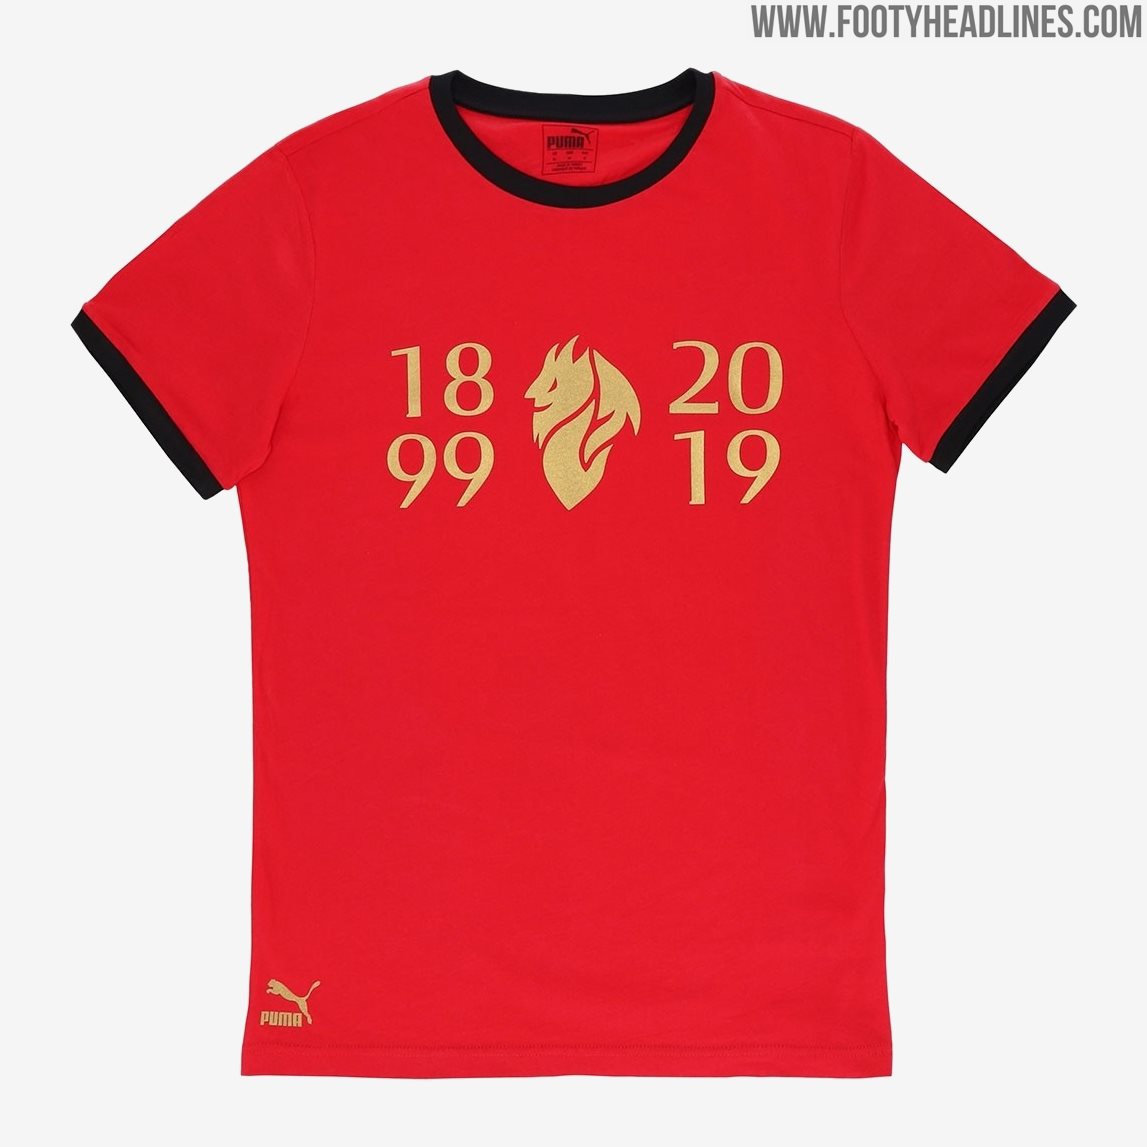 AC Milan 120th Anniversary PUMA Kit